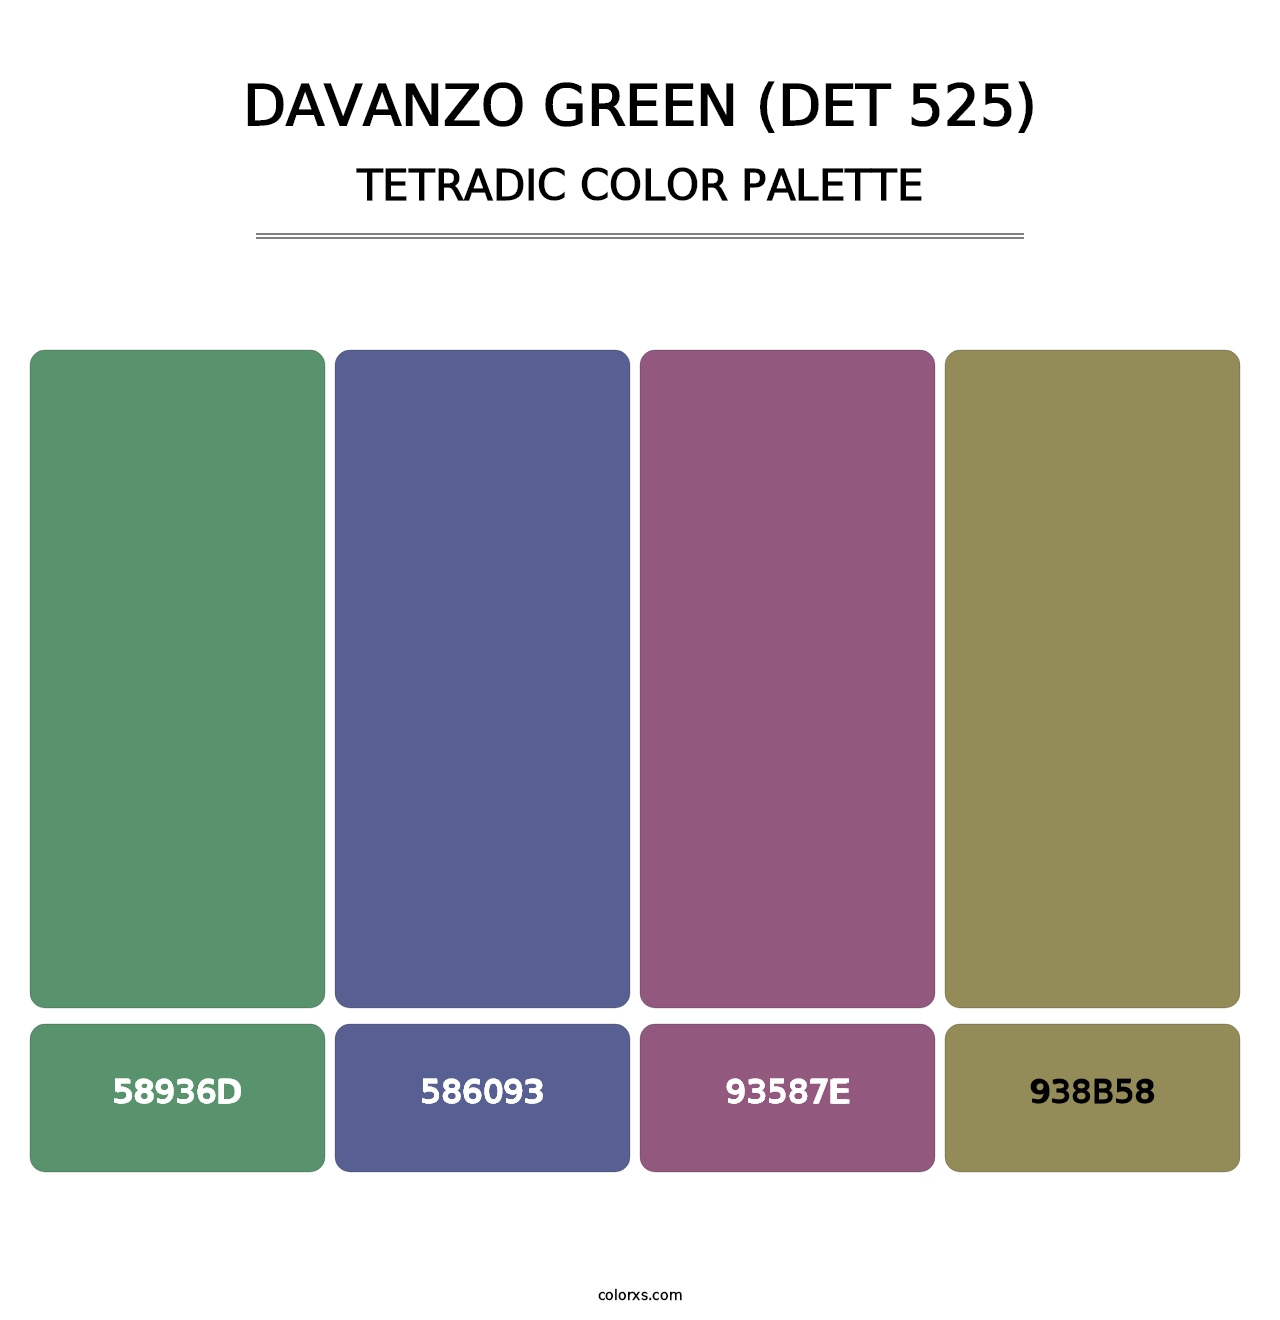 DaVanzo Green (DET 525) - Tetradic Color Palette